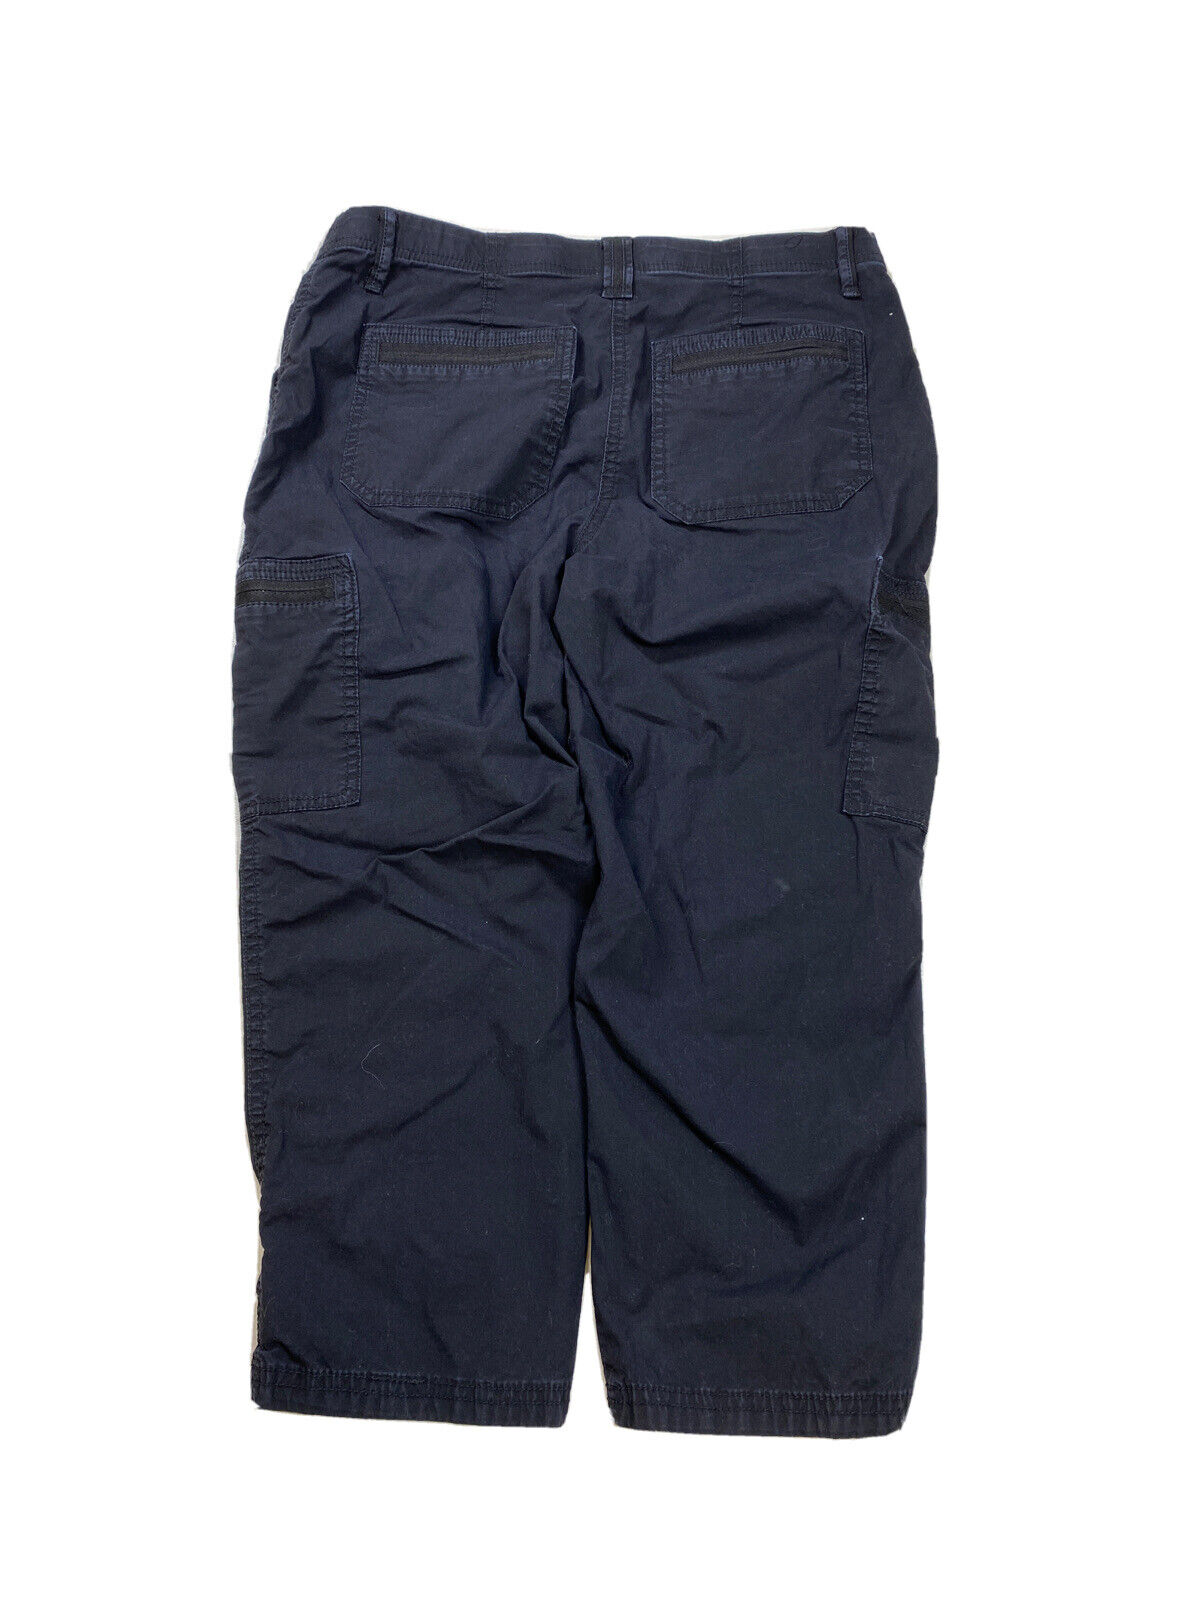 Chico's Women's Navy Blue Cargo Cropped Pants - Petite 0.5/US 6P